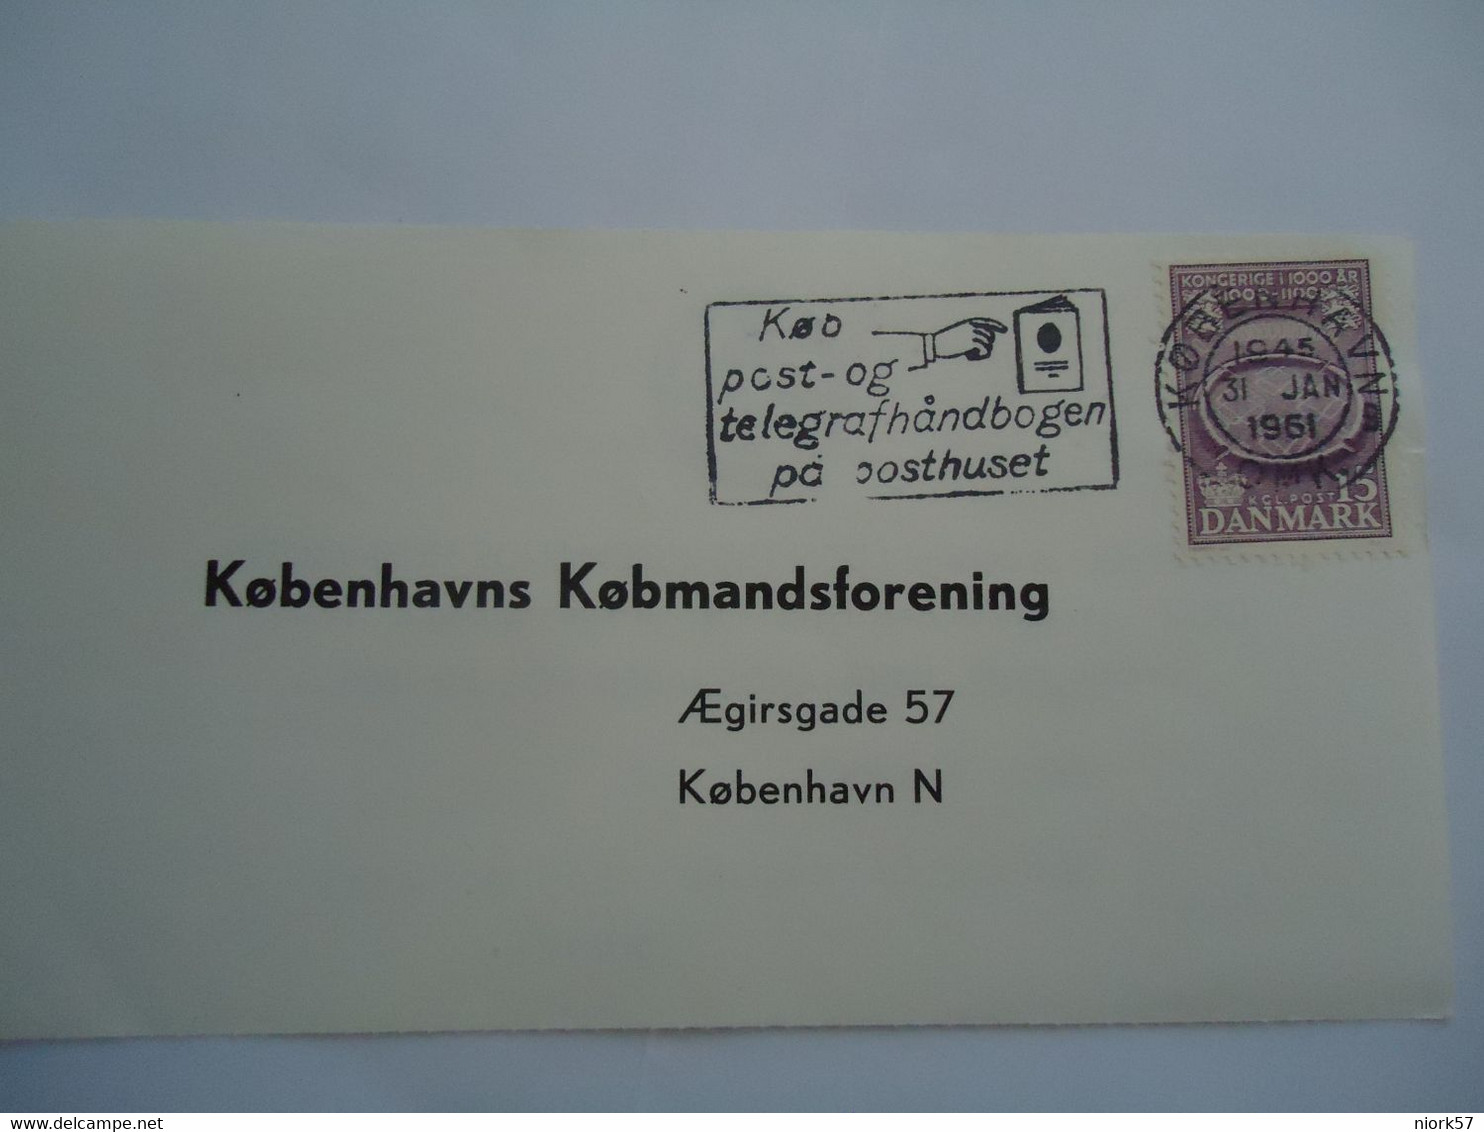 DENMARK SHEET 1961 2 SCAN - Cartes-maximum (CM)